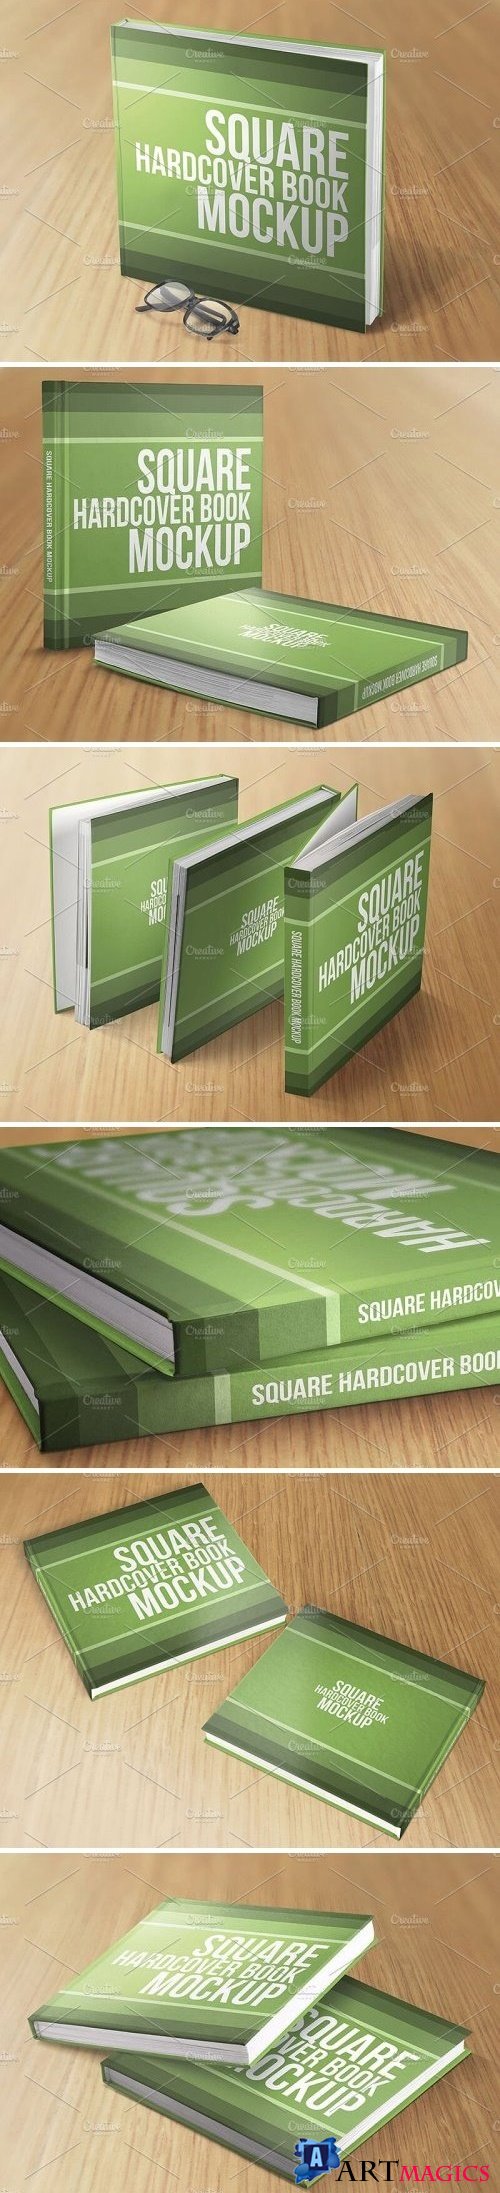 Square Hardcover Book Mockups 1590879